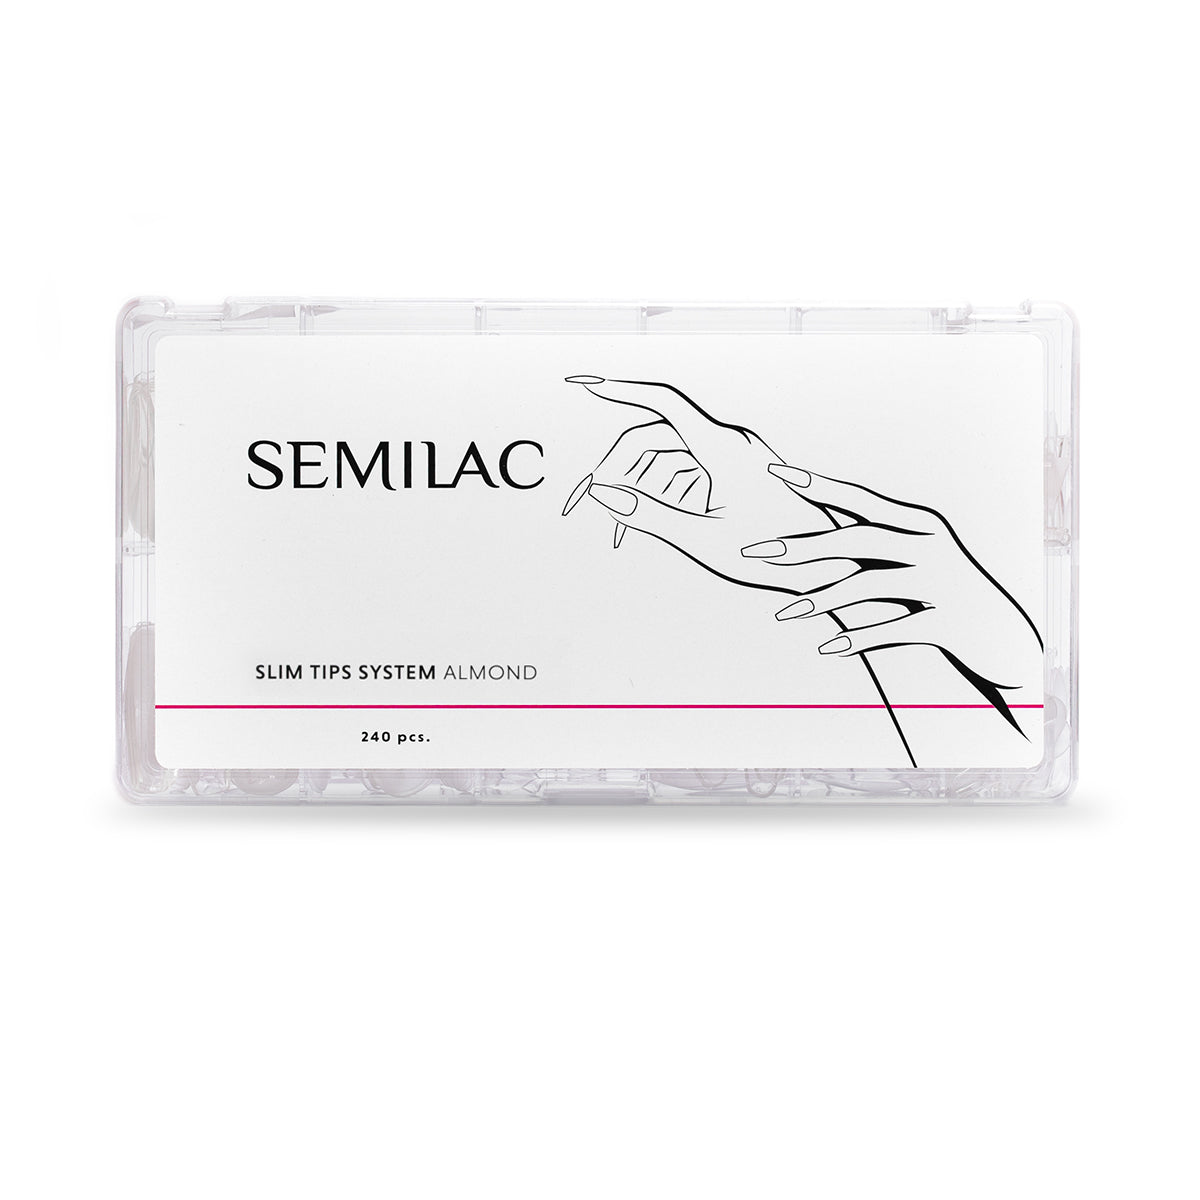 Semilac Slim Tips System Almond 240 pcs. - Semilac UK